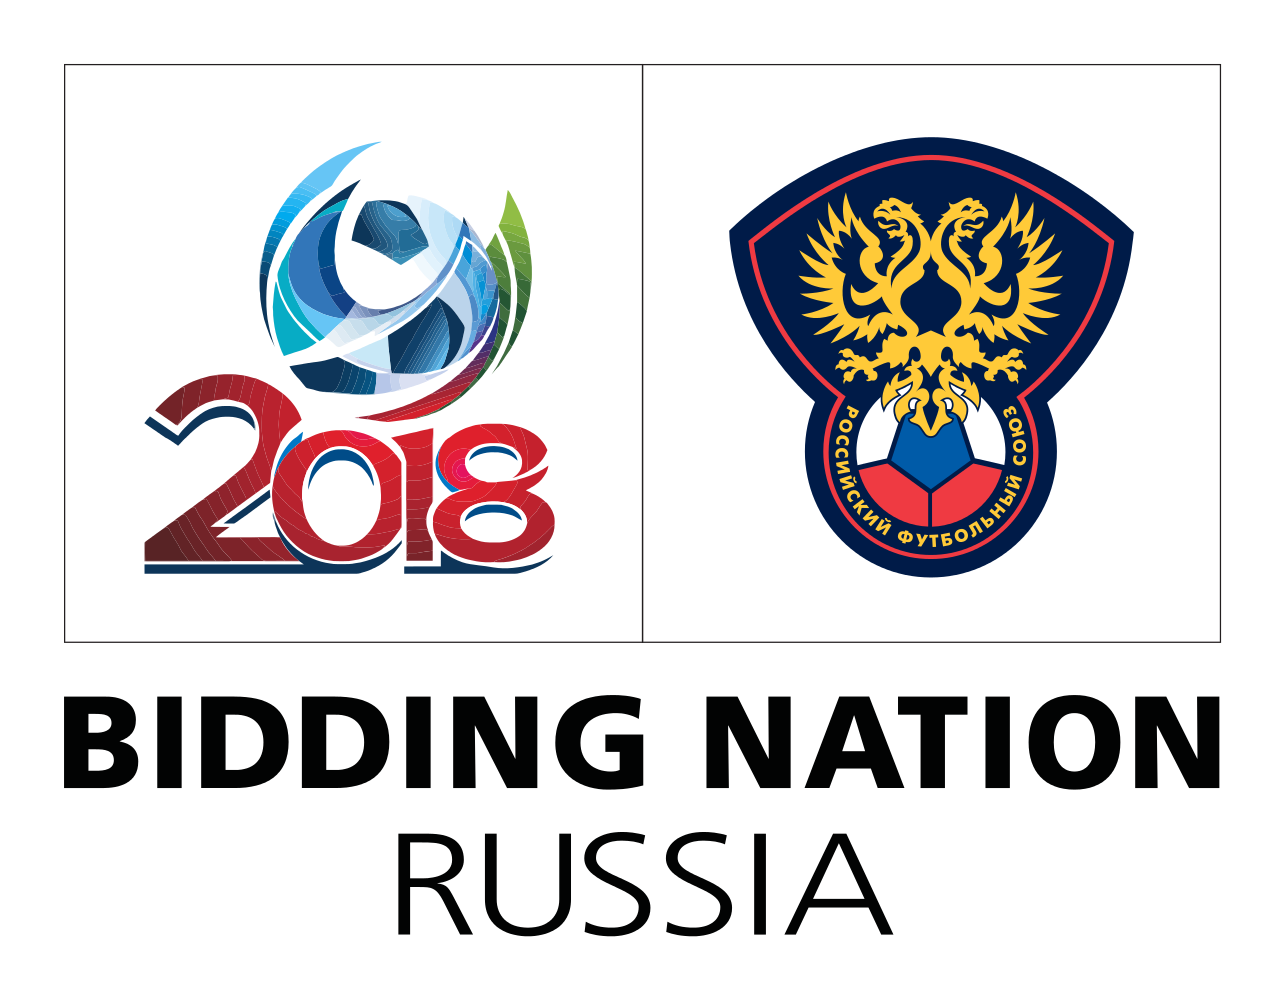 Logo Fifa World Cup 2018 Png Transparent Logo Fifa World Cup 2018png